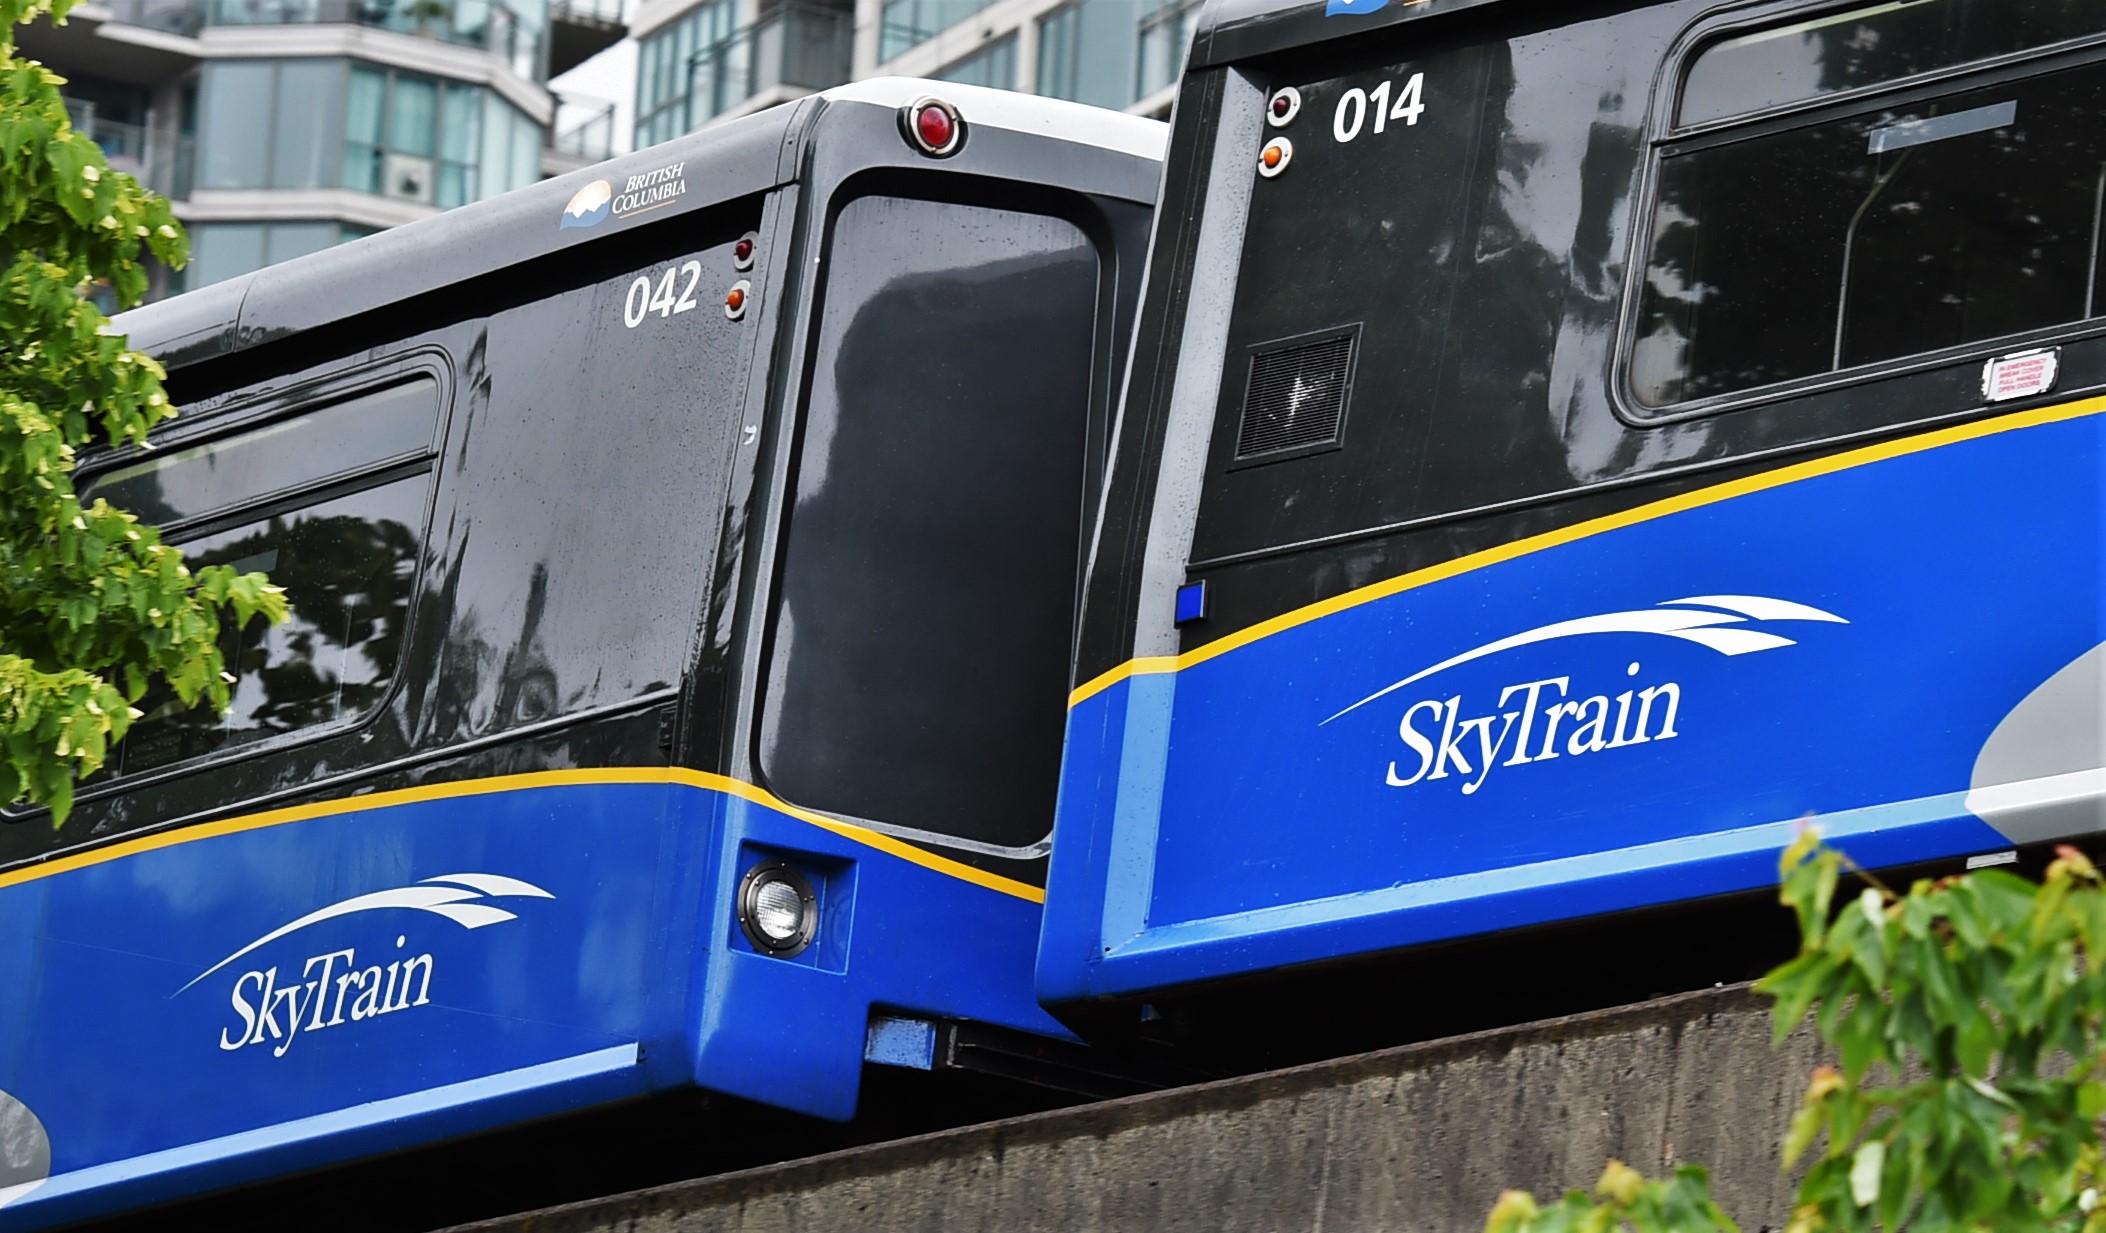 Transit groper pleads guilty in SkyTrain, bus assaults - Richmond News